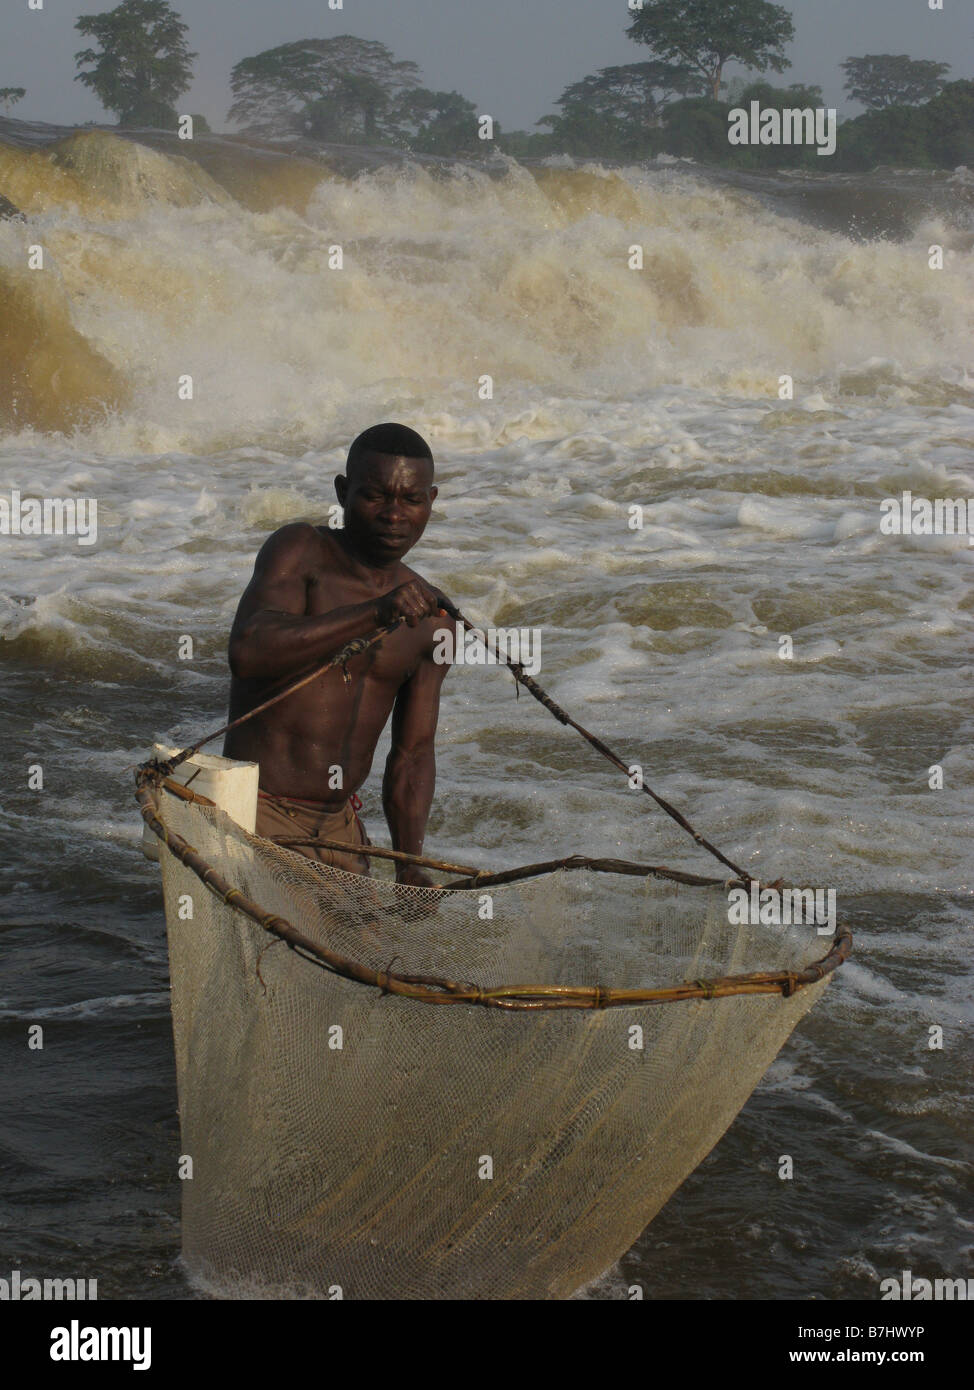 Wagenia Fischer mit Kugel net an Stanley fällt Rutschen Boyoma am Fluss Kongo Demokratische Republik Kongo am Kasangani Stockfoto